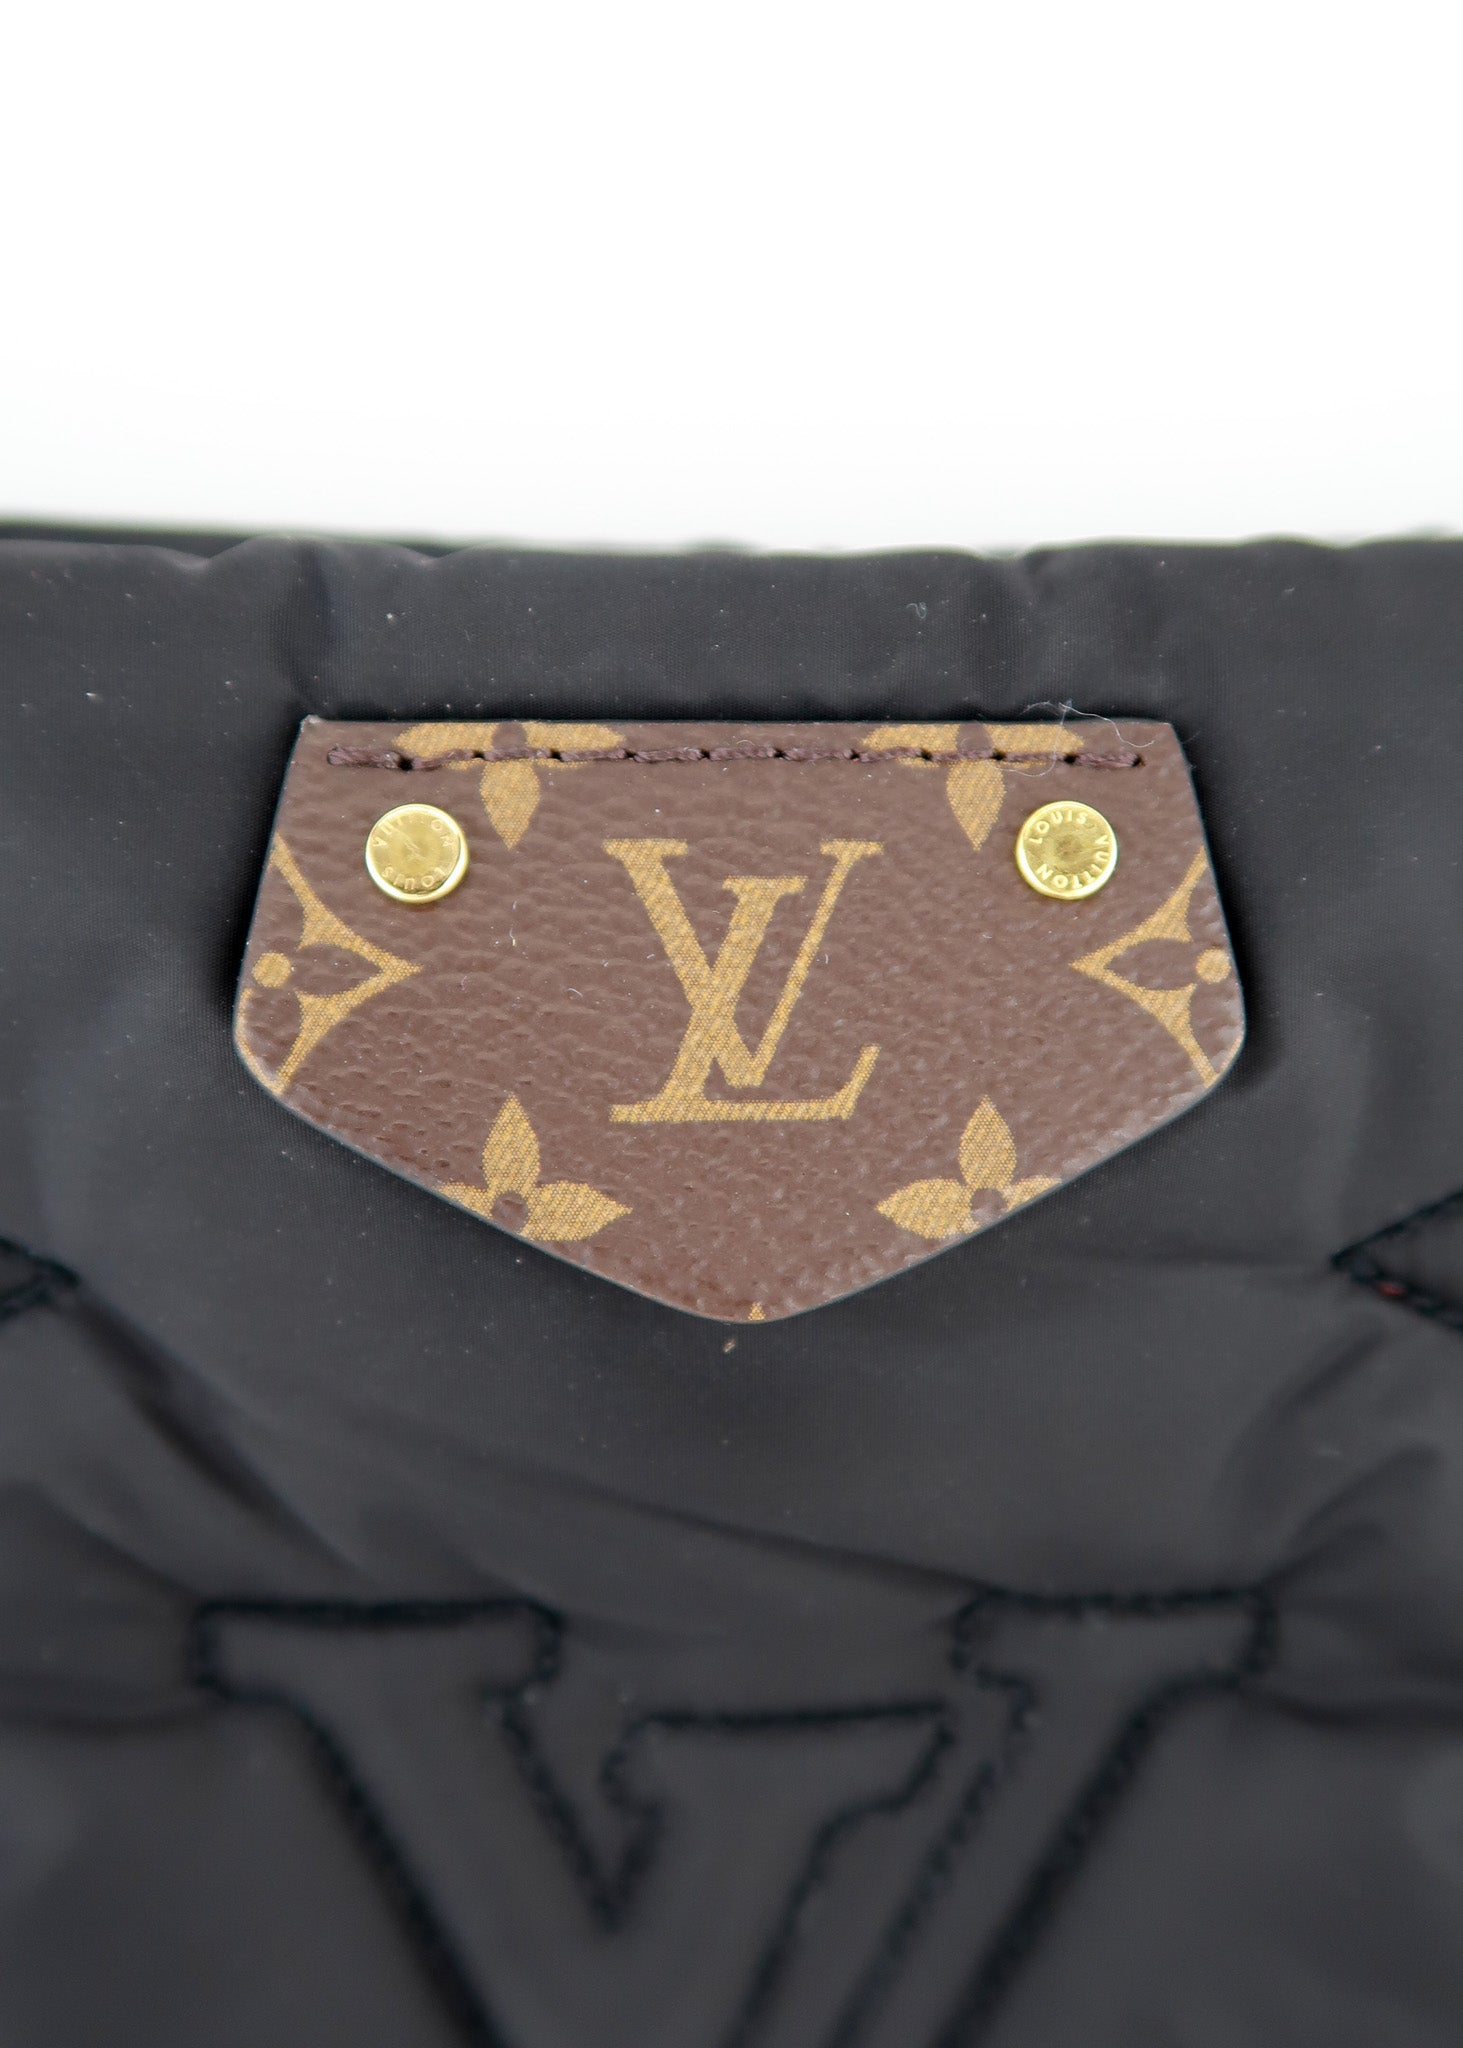 Louis Vuitton Black x Pink Pillow Monogram Puffy Multi Pochette Maxi Bag  1118lv18